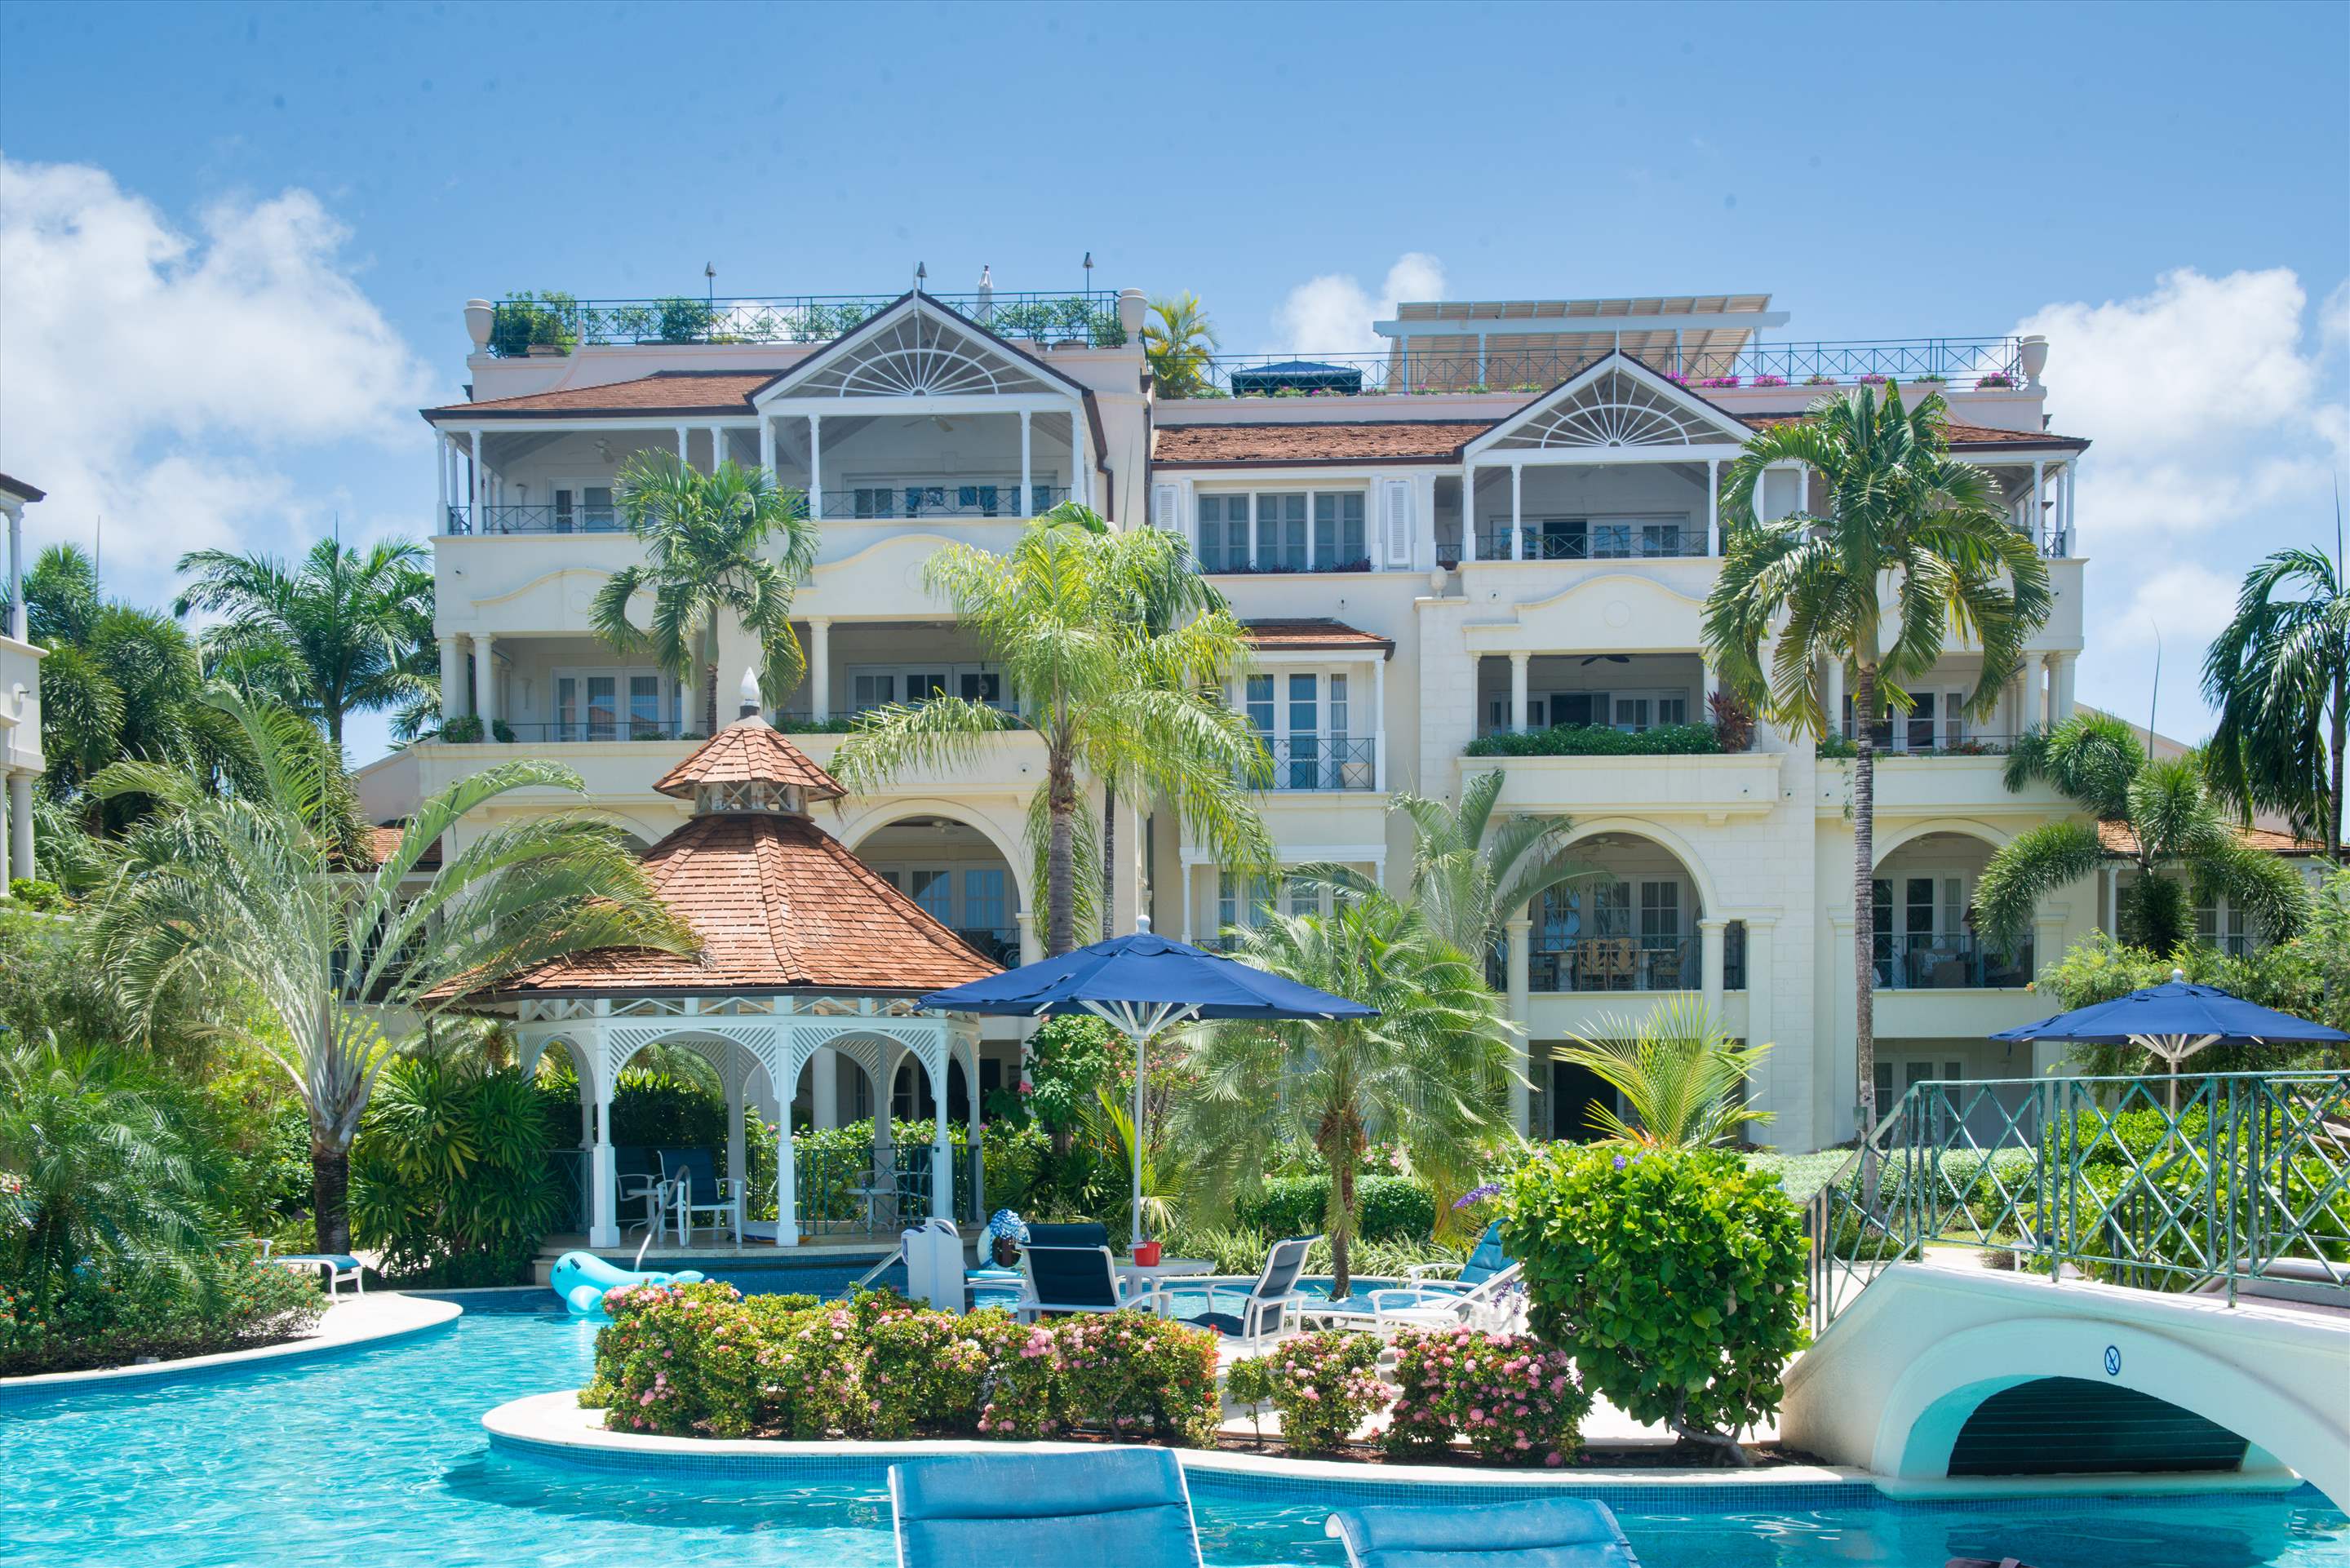 Schooner Bay 205, Three Bedroom rate, 3 bedroom apartment in St. James & West Coast, Barbados